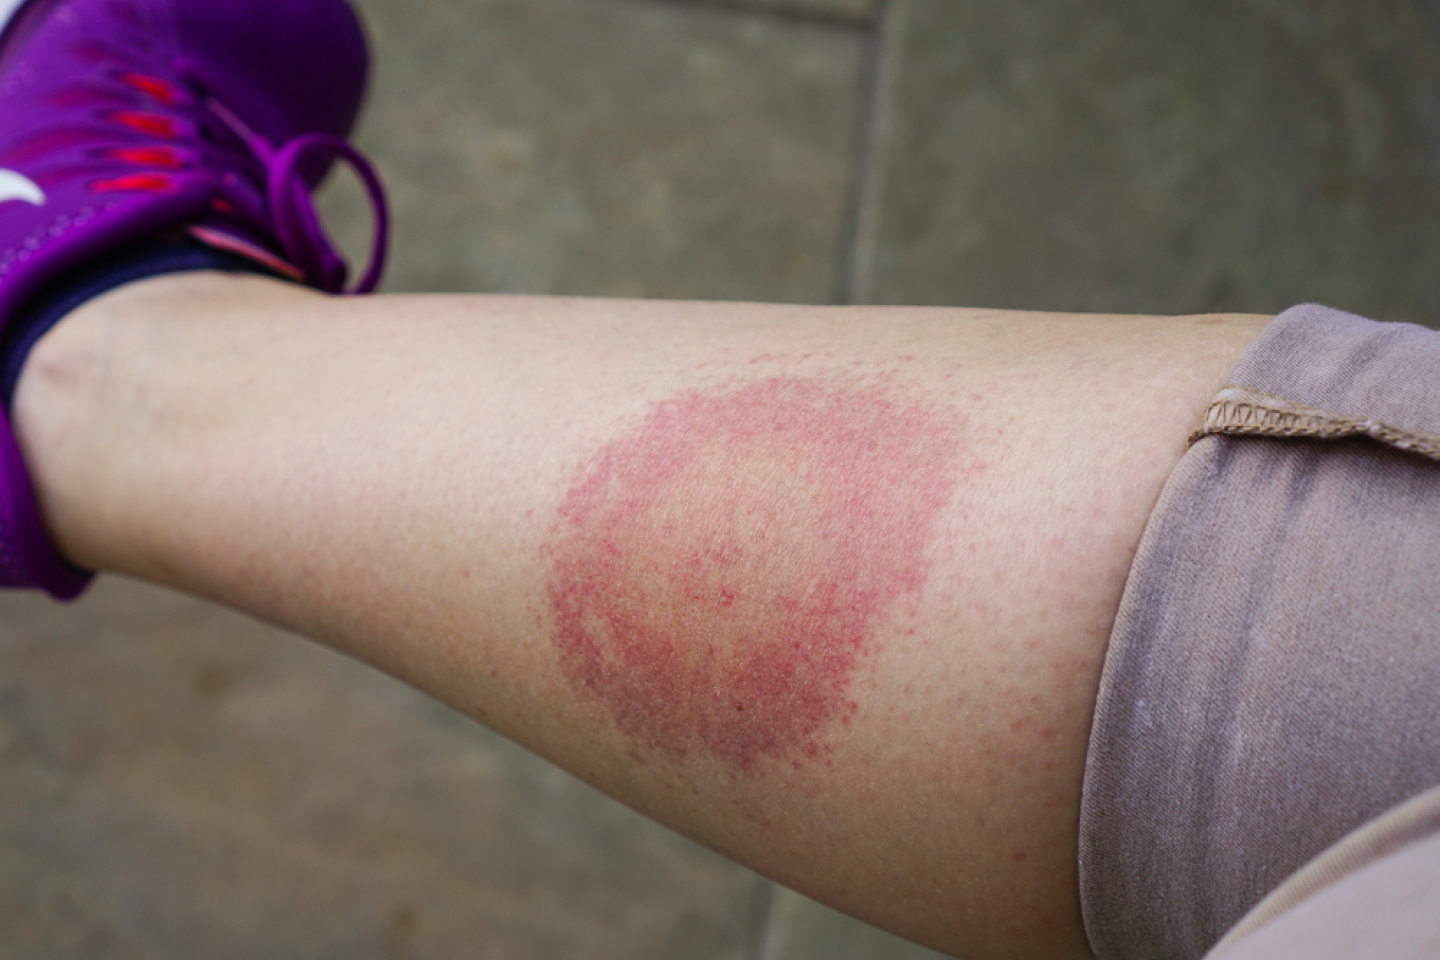 Lyme disease, Borreliosis or Borrelia, typical lyme rash, spot. A person, leg bitten by a deer tick.